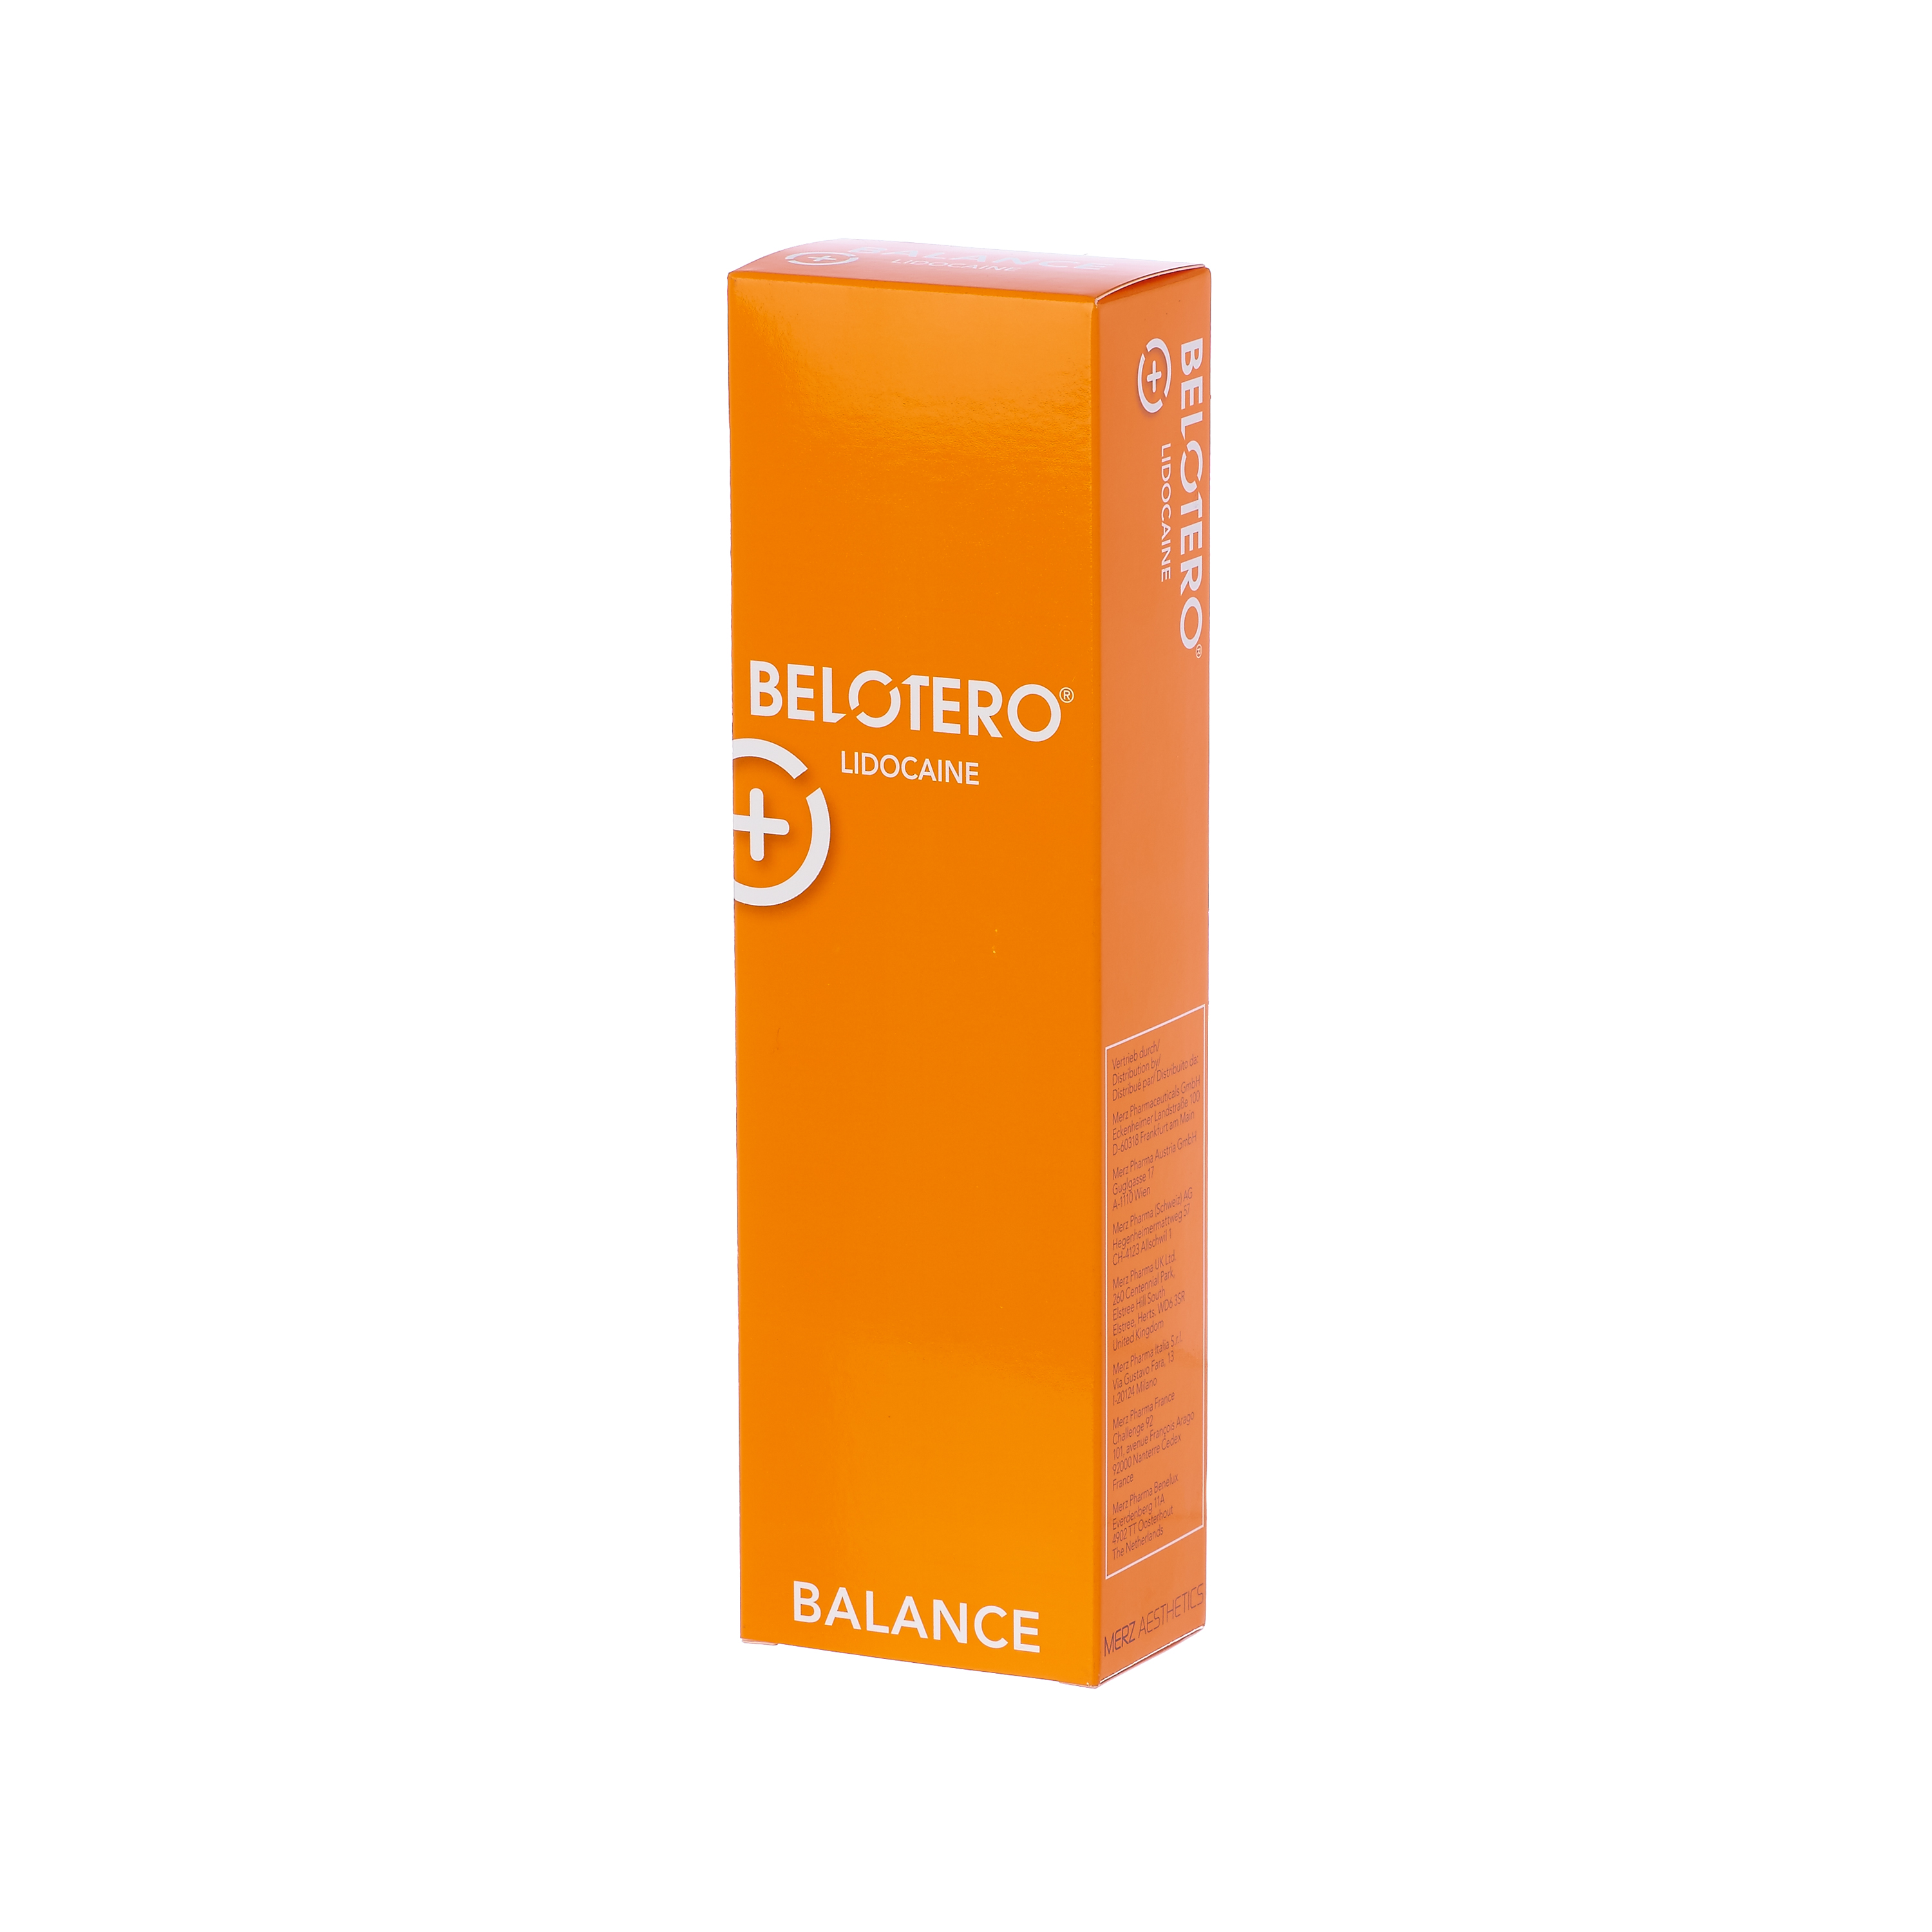 Belotero Balance with Lidocaine 